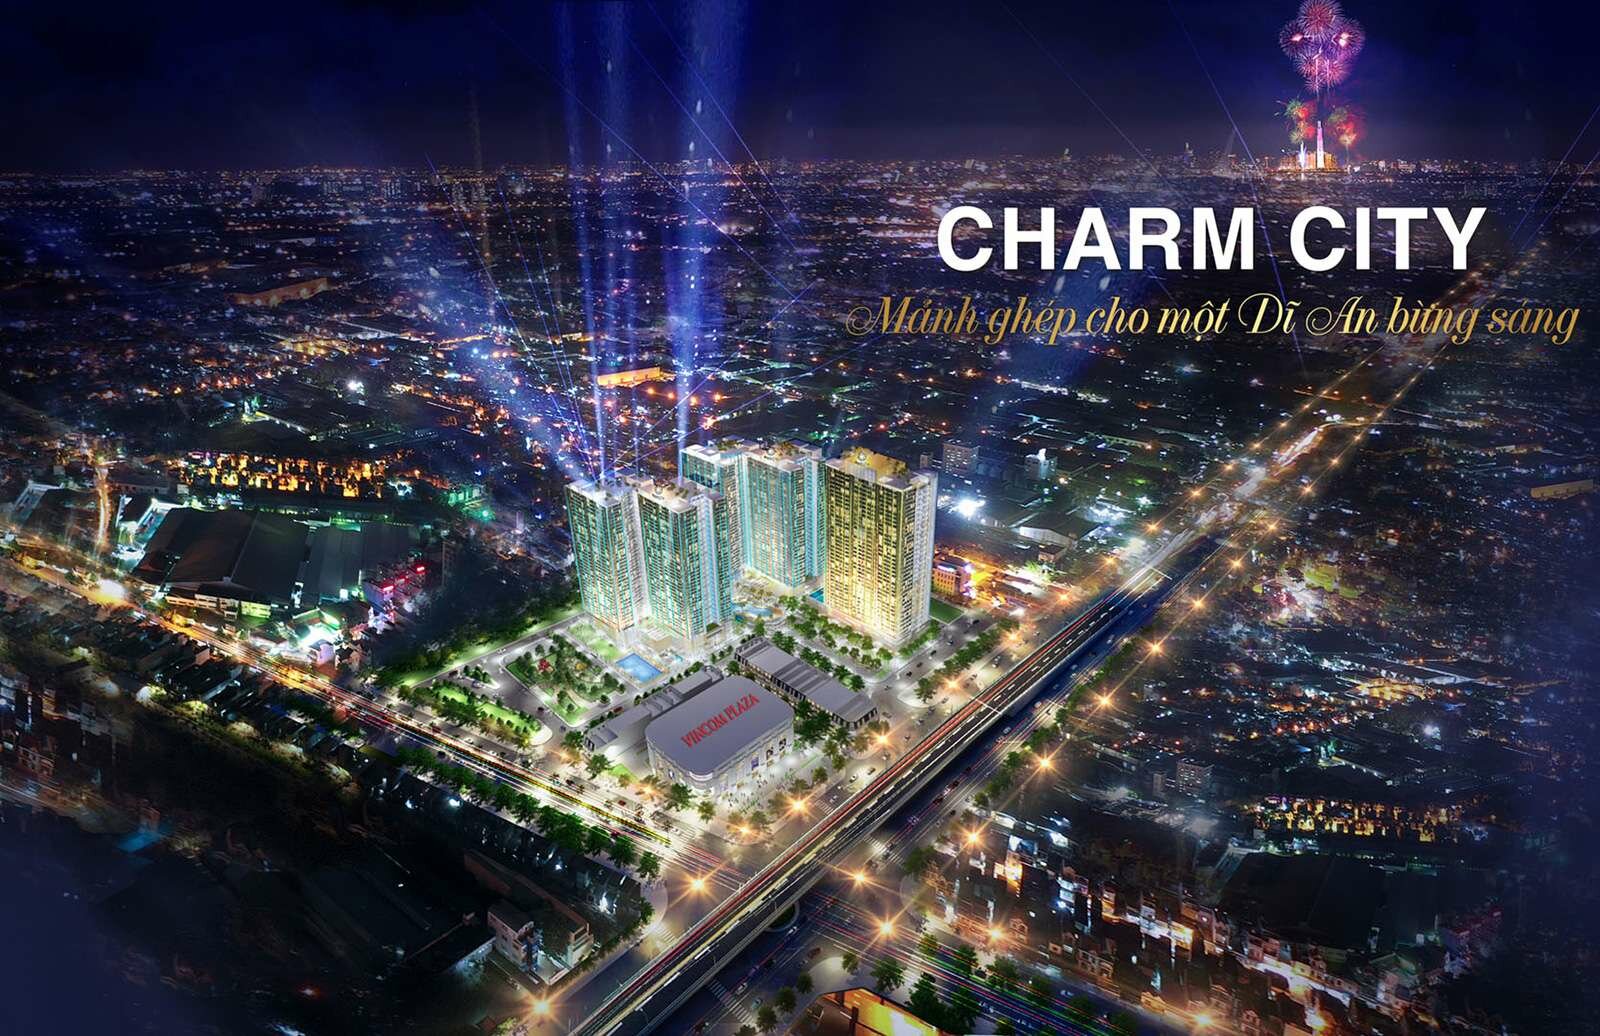 Charm City background